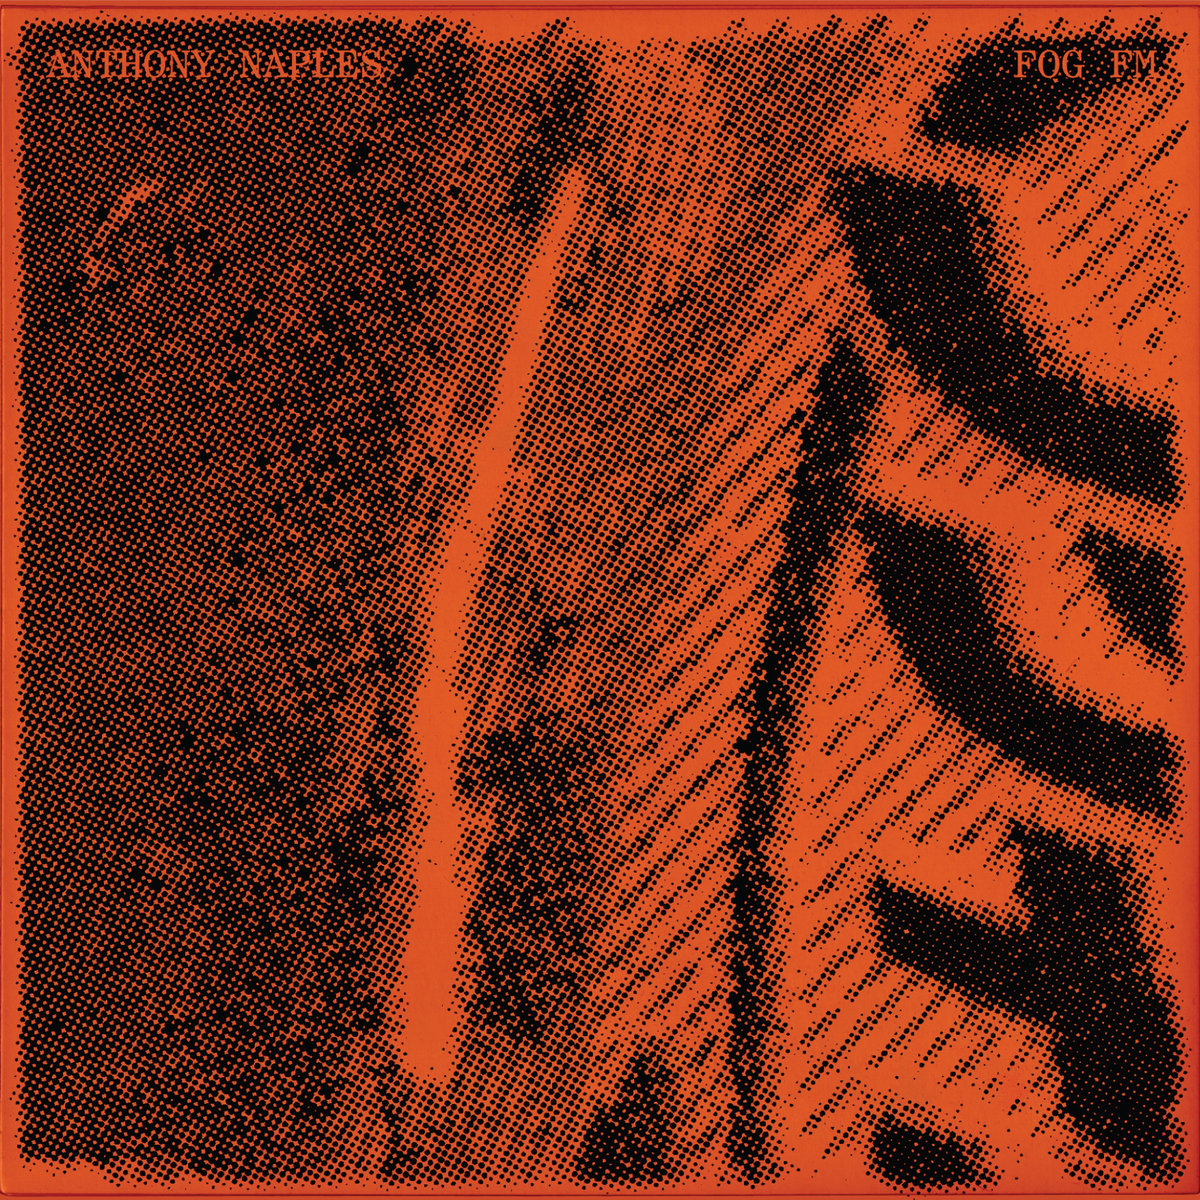 Album of the Week: Anthony Naples – Fog FM